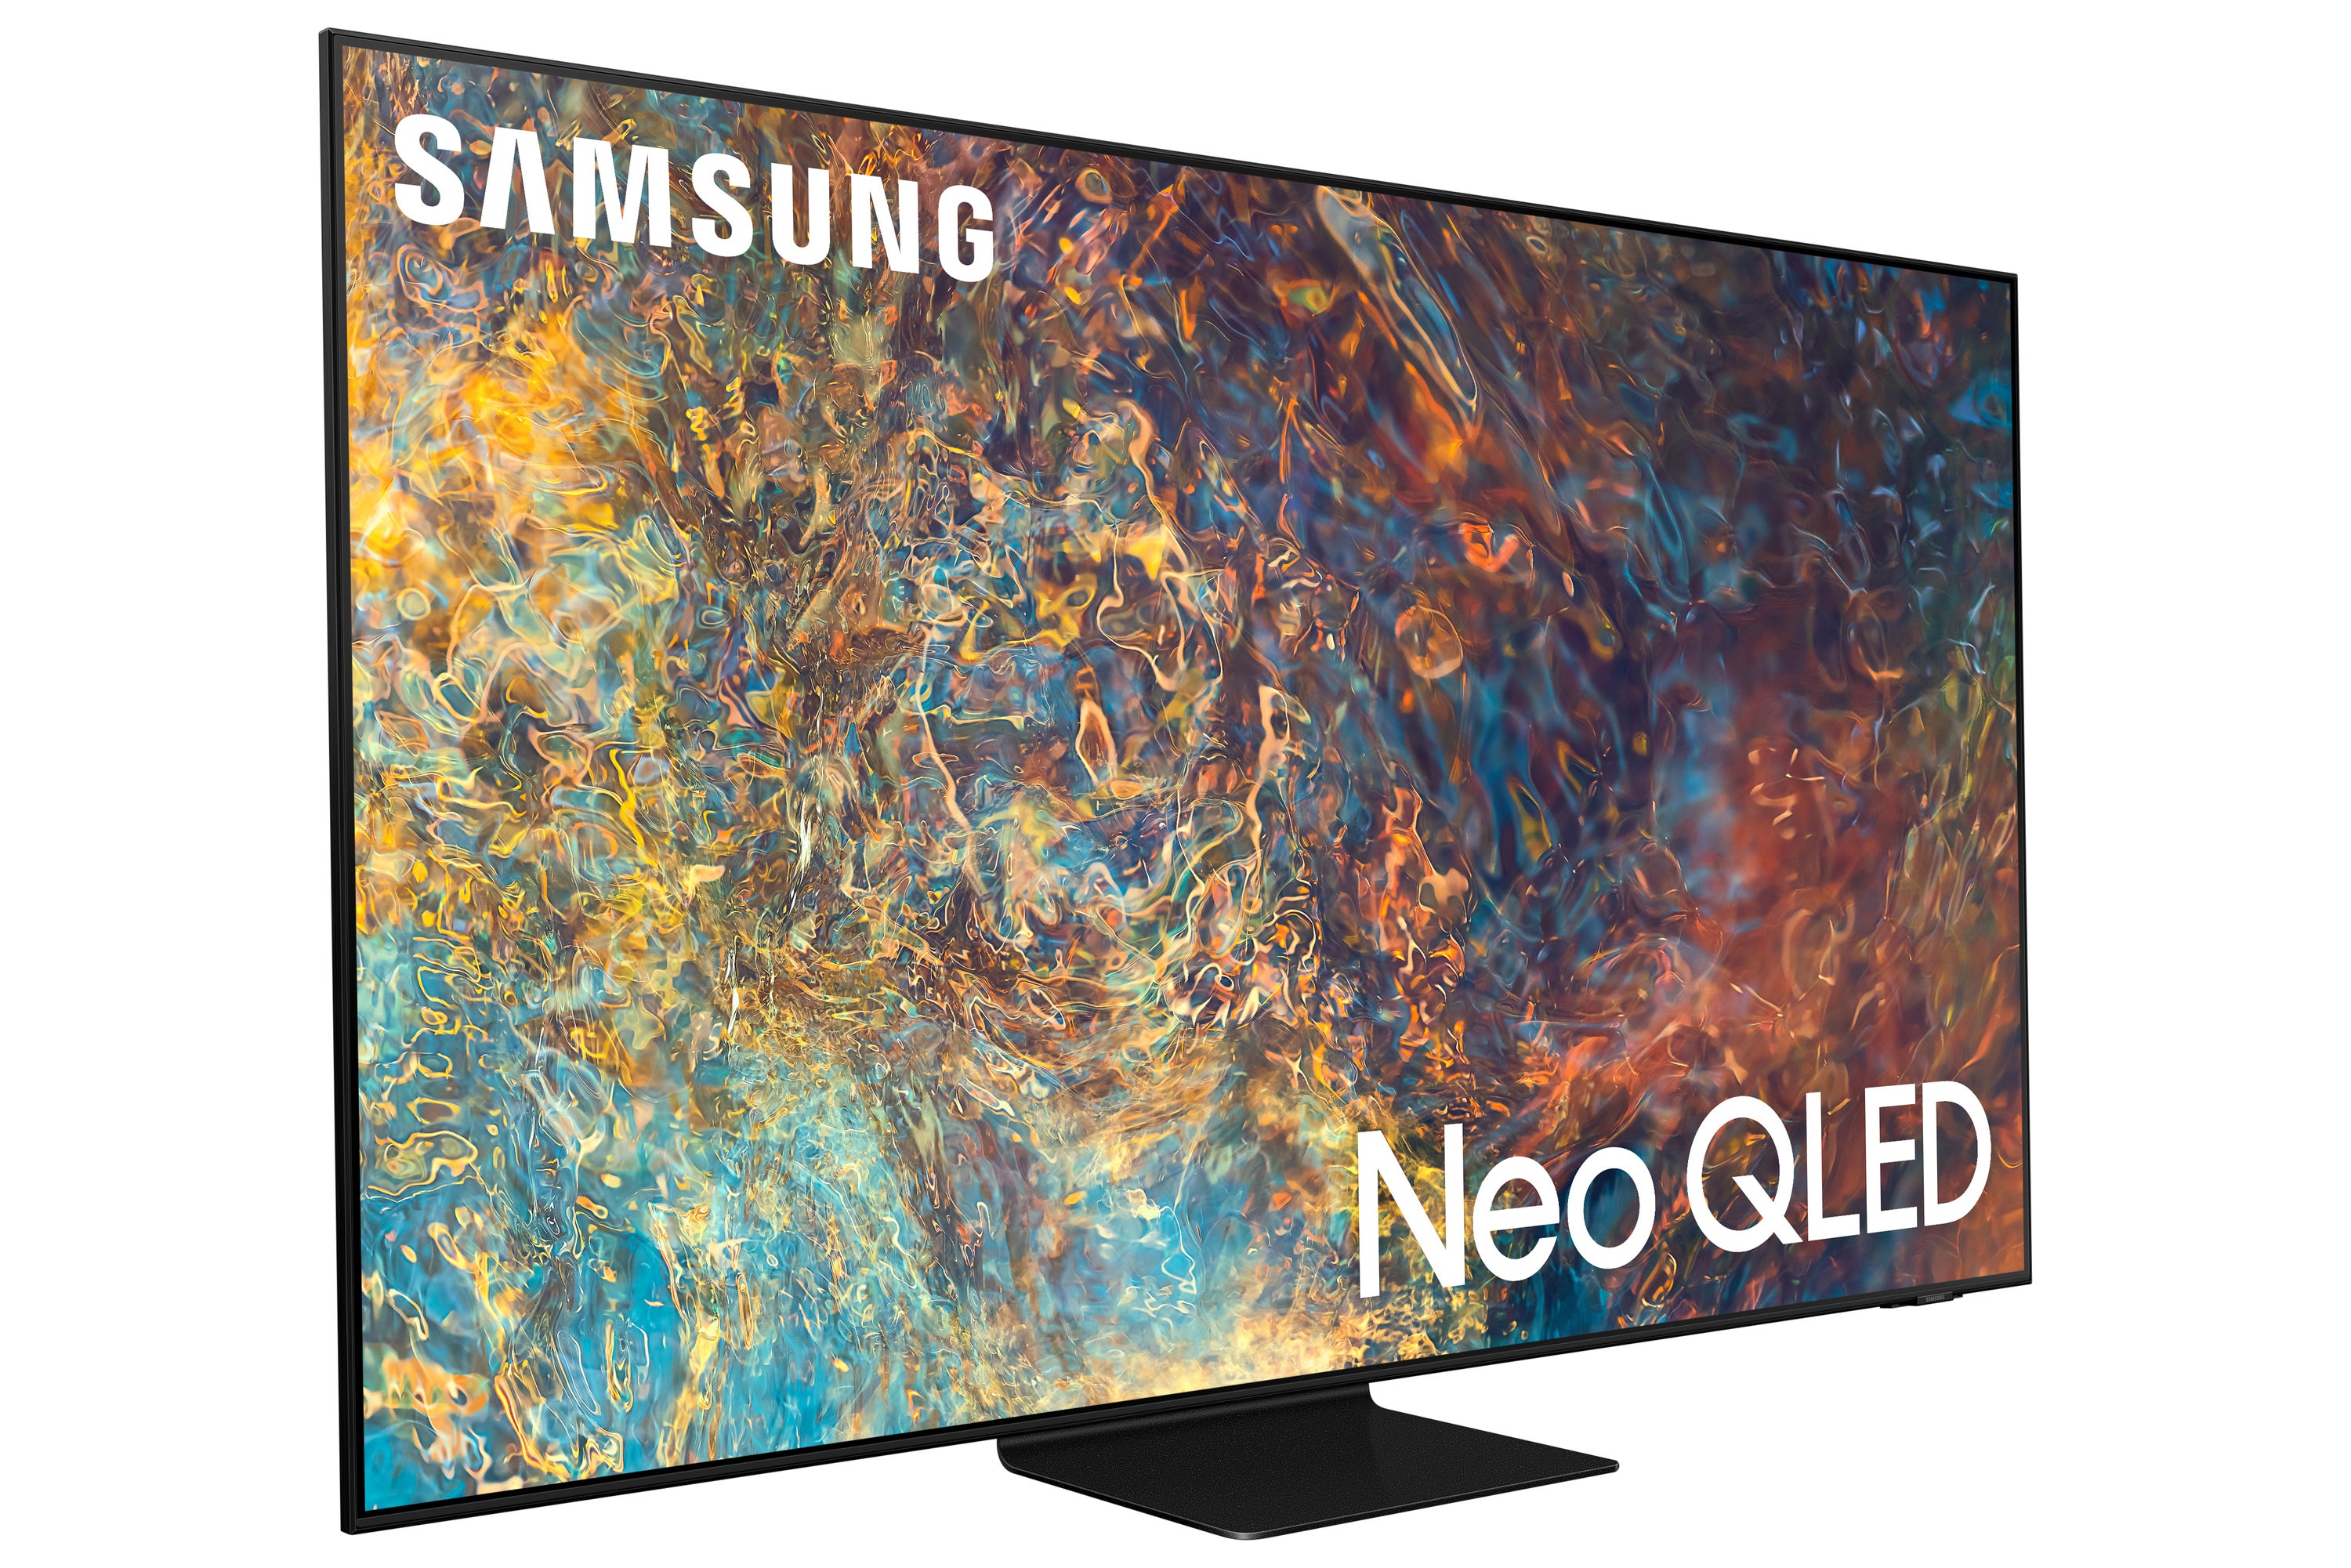 Restored Samsung 65" Class 4K (2160p) Smart QLED TV (QN65QN90AAFXZA) (Refurbished) - image 2 of 3